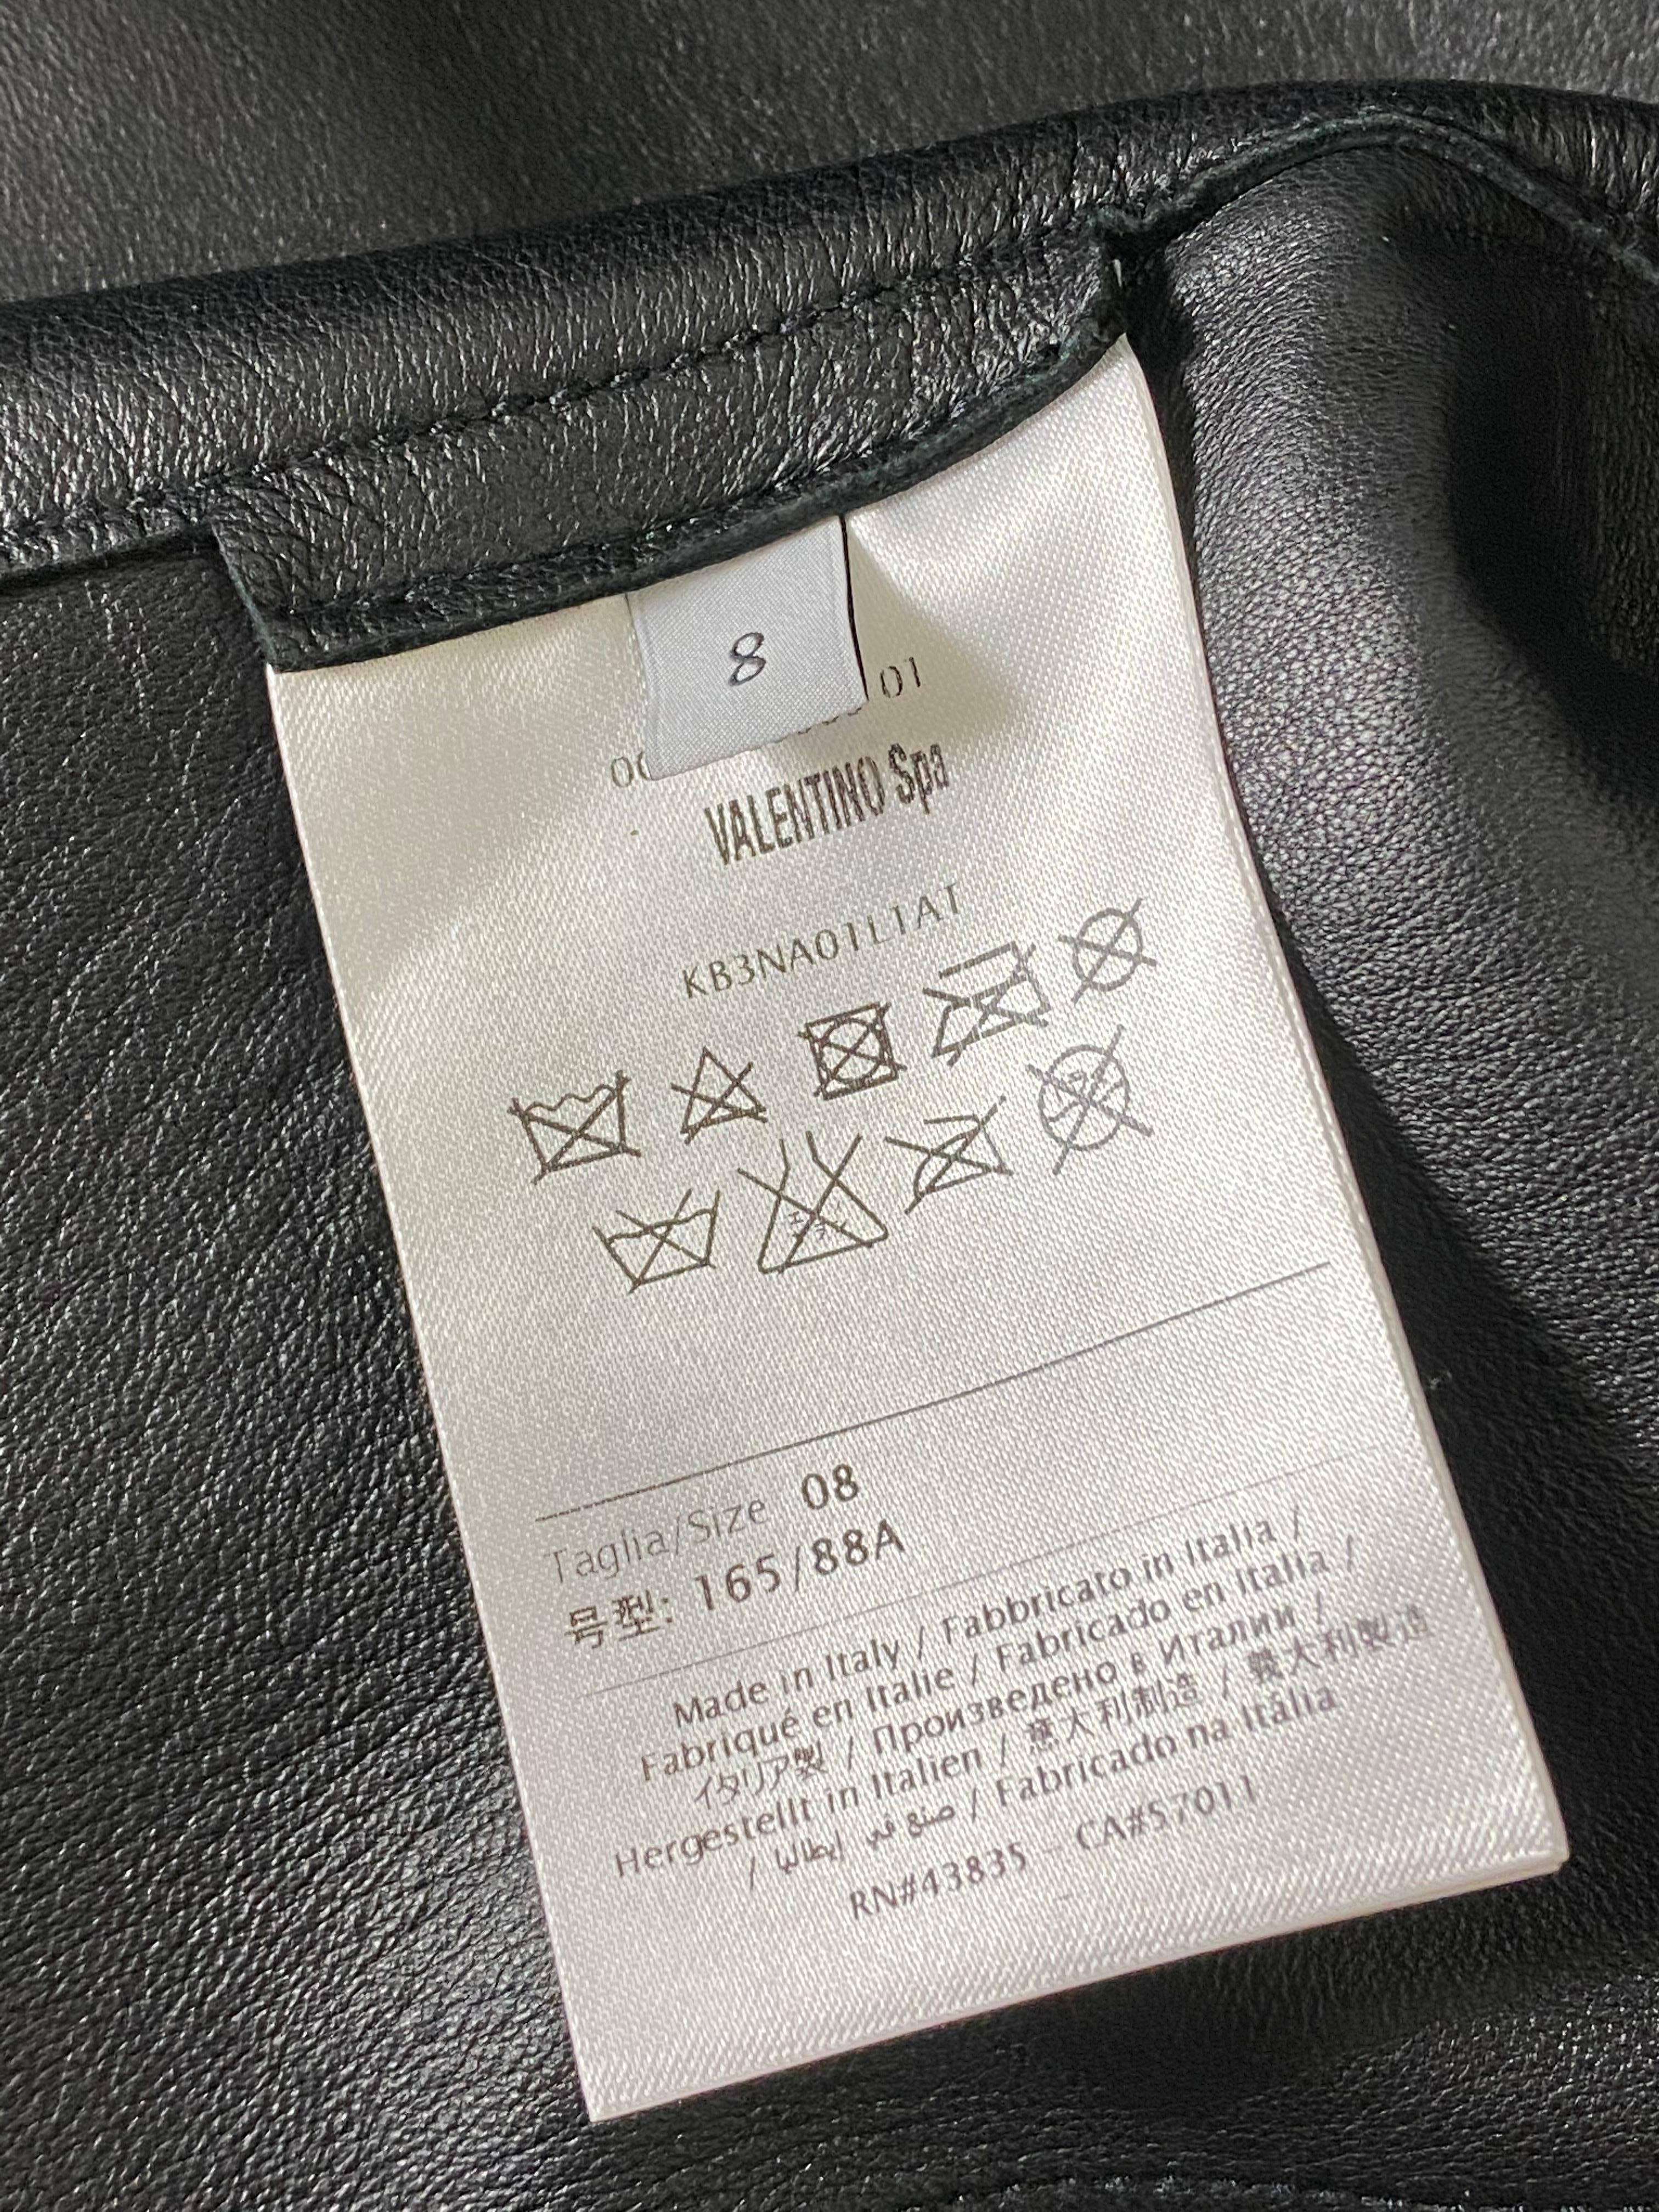 Valentino Black Leather Studded Jacket Size 8 For Sale 11